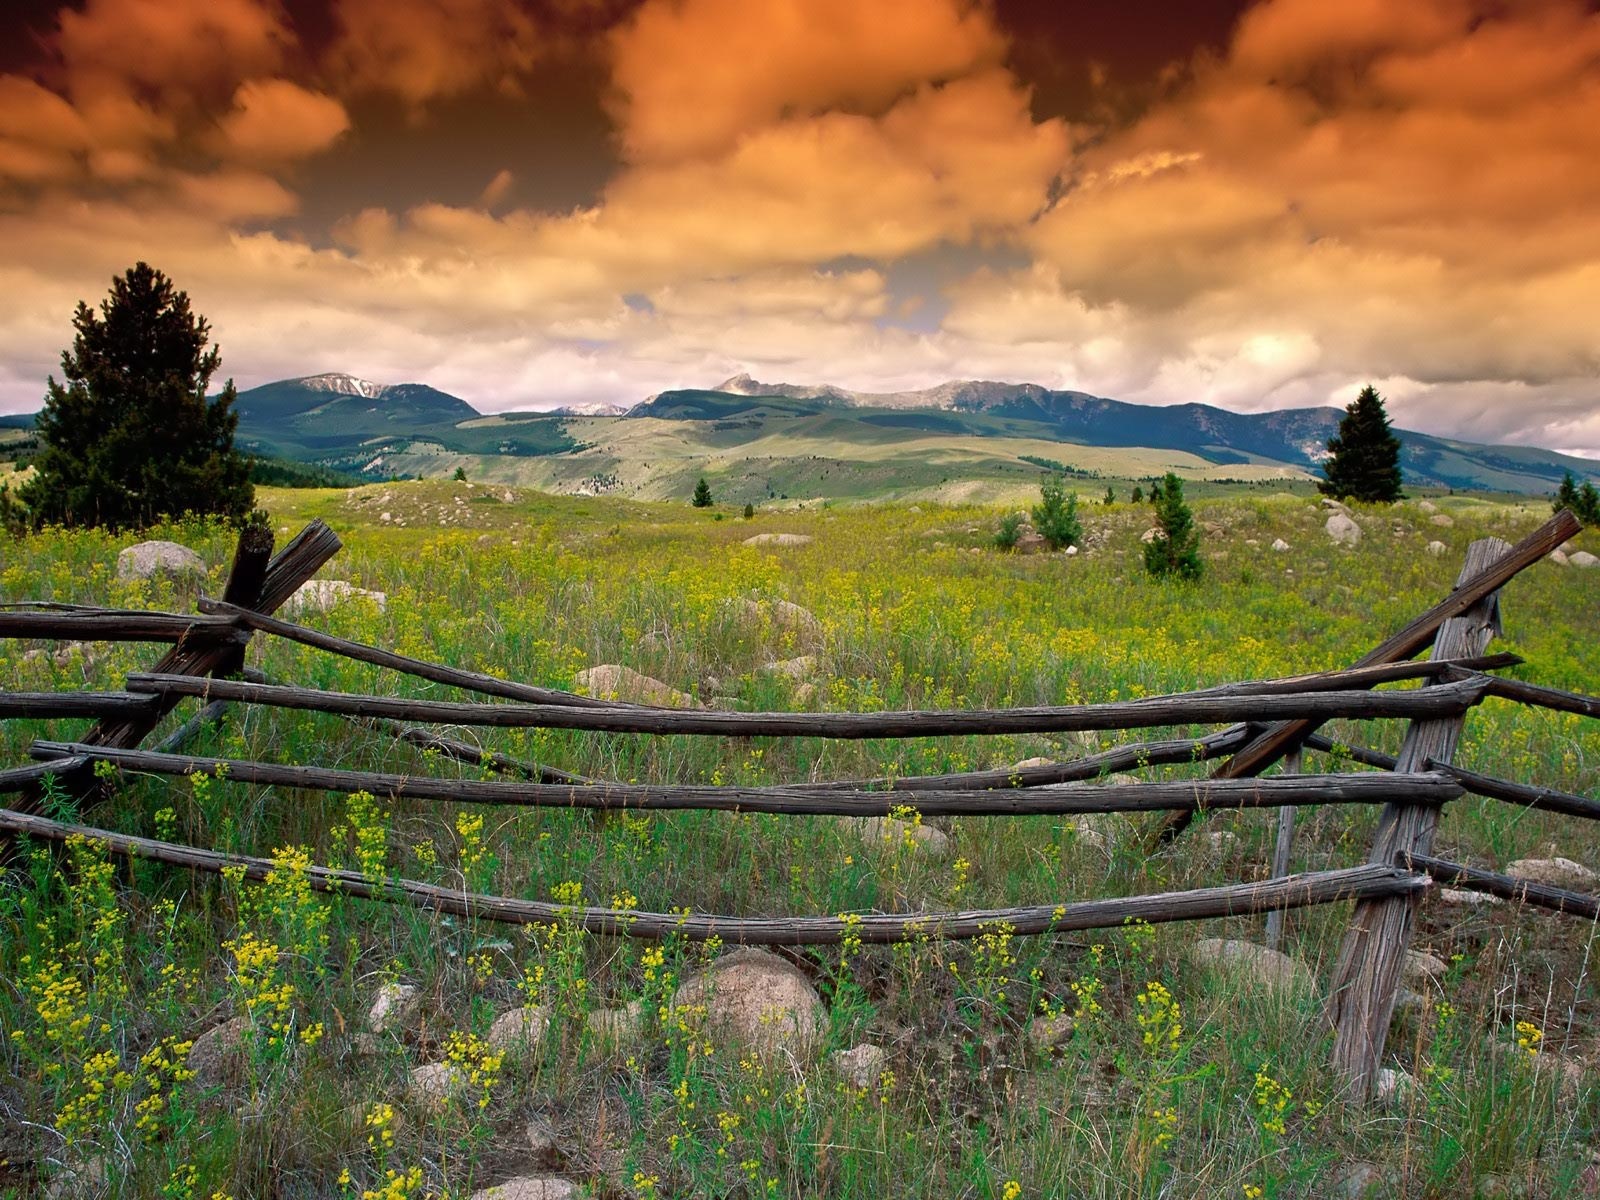 Amazing Montana Mountain Landscape 1600 x 1200 438 kB jpeg